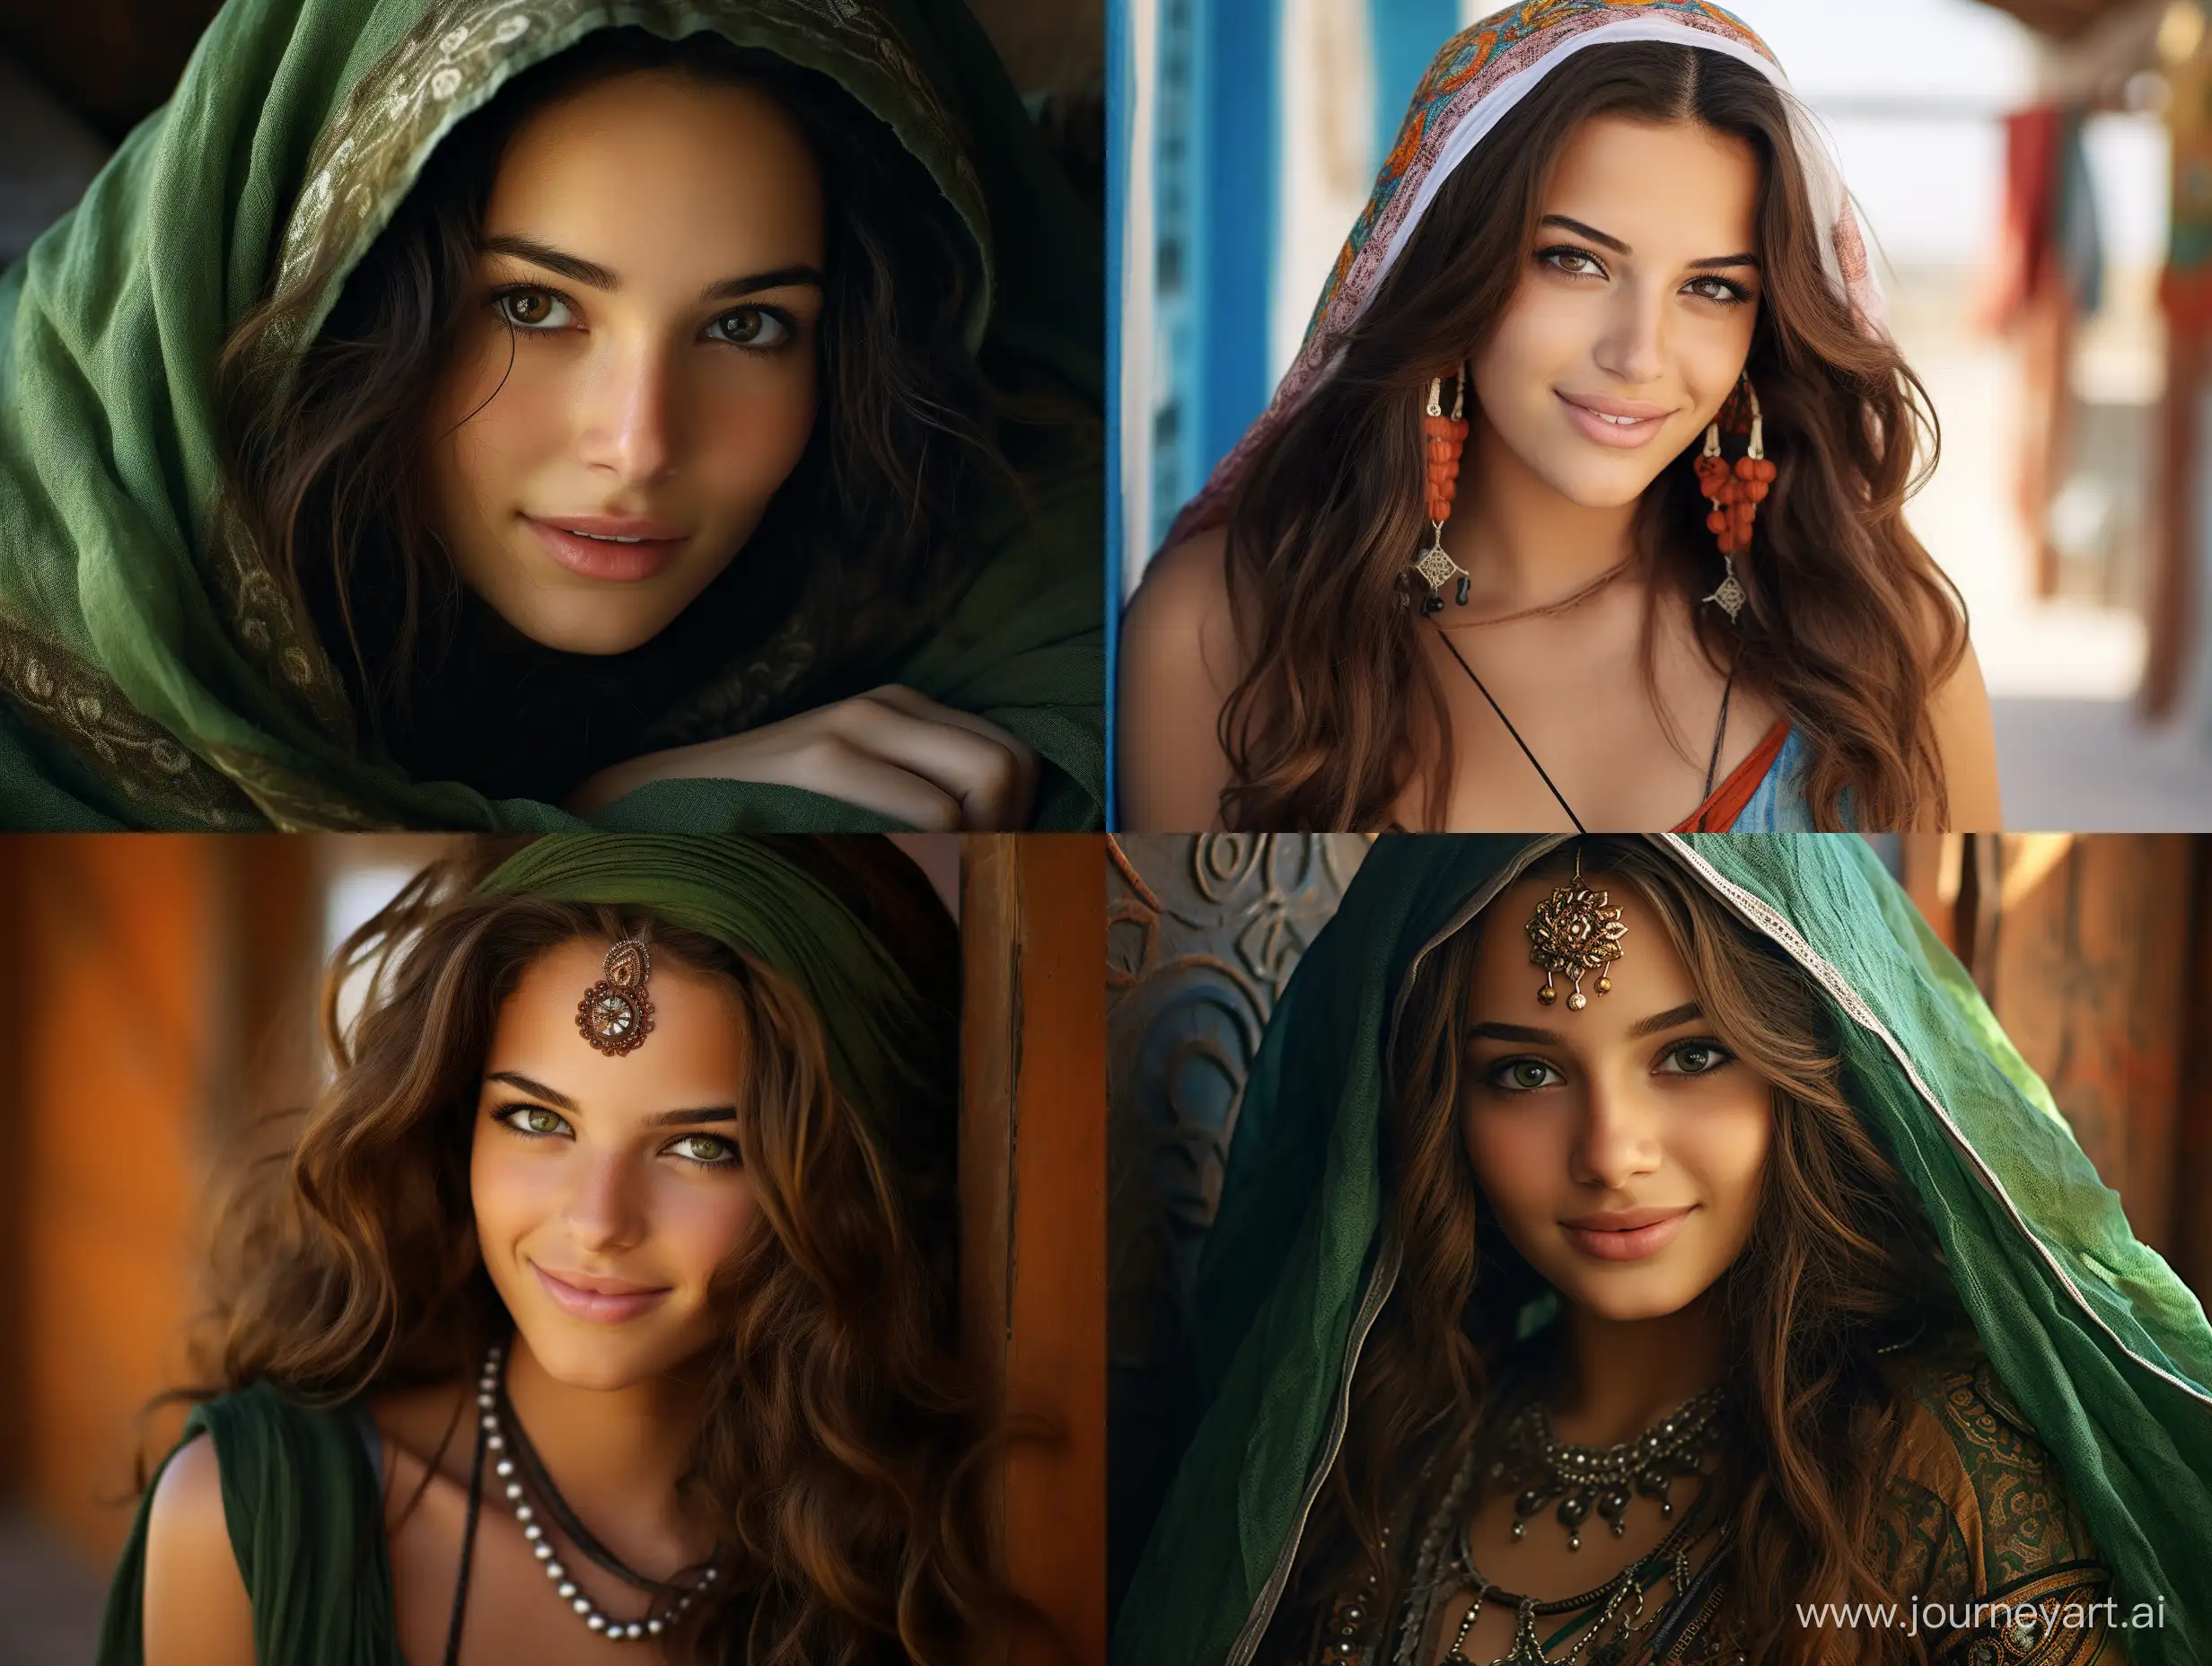 Radiant-Tunisian-Girl-with-Captivating-Green-Eyes-Smiling